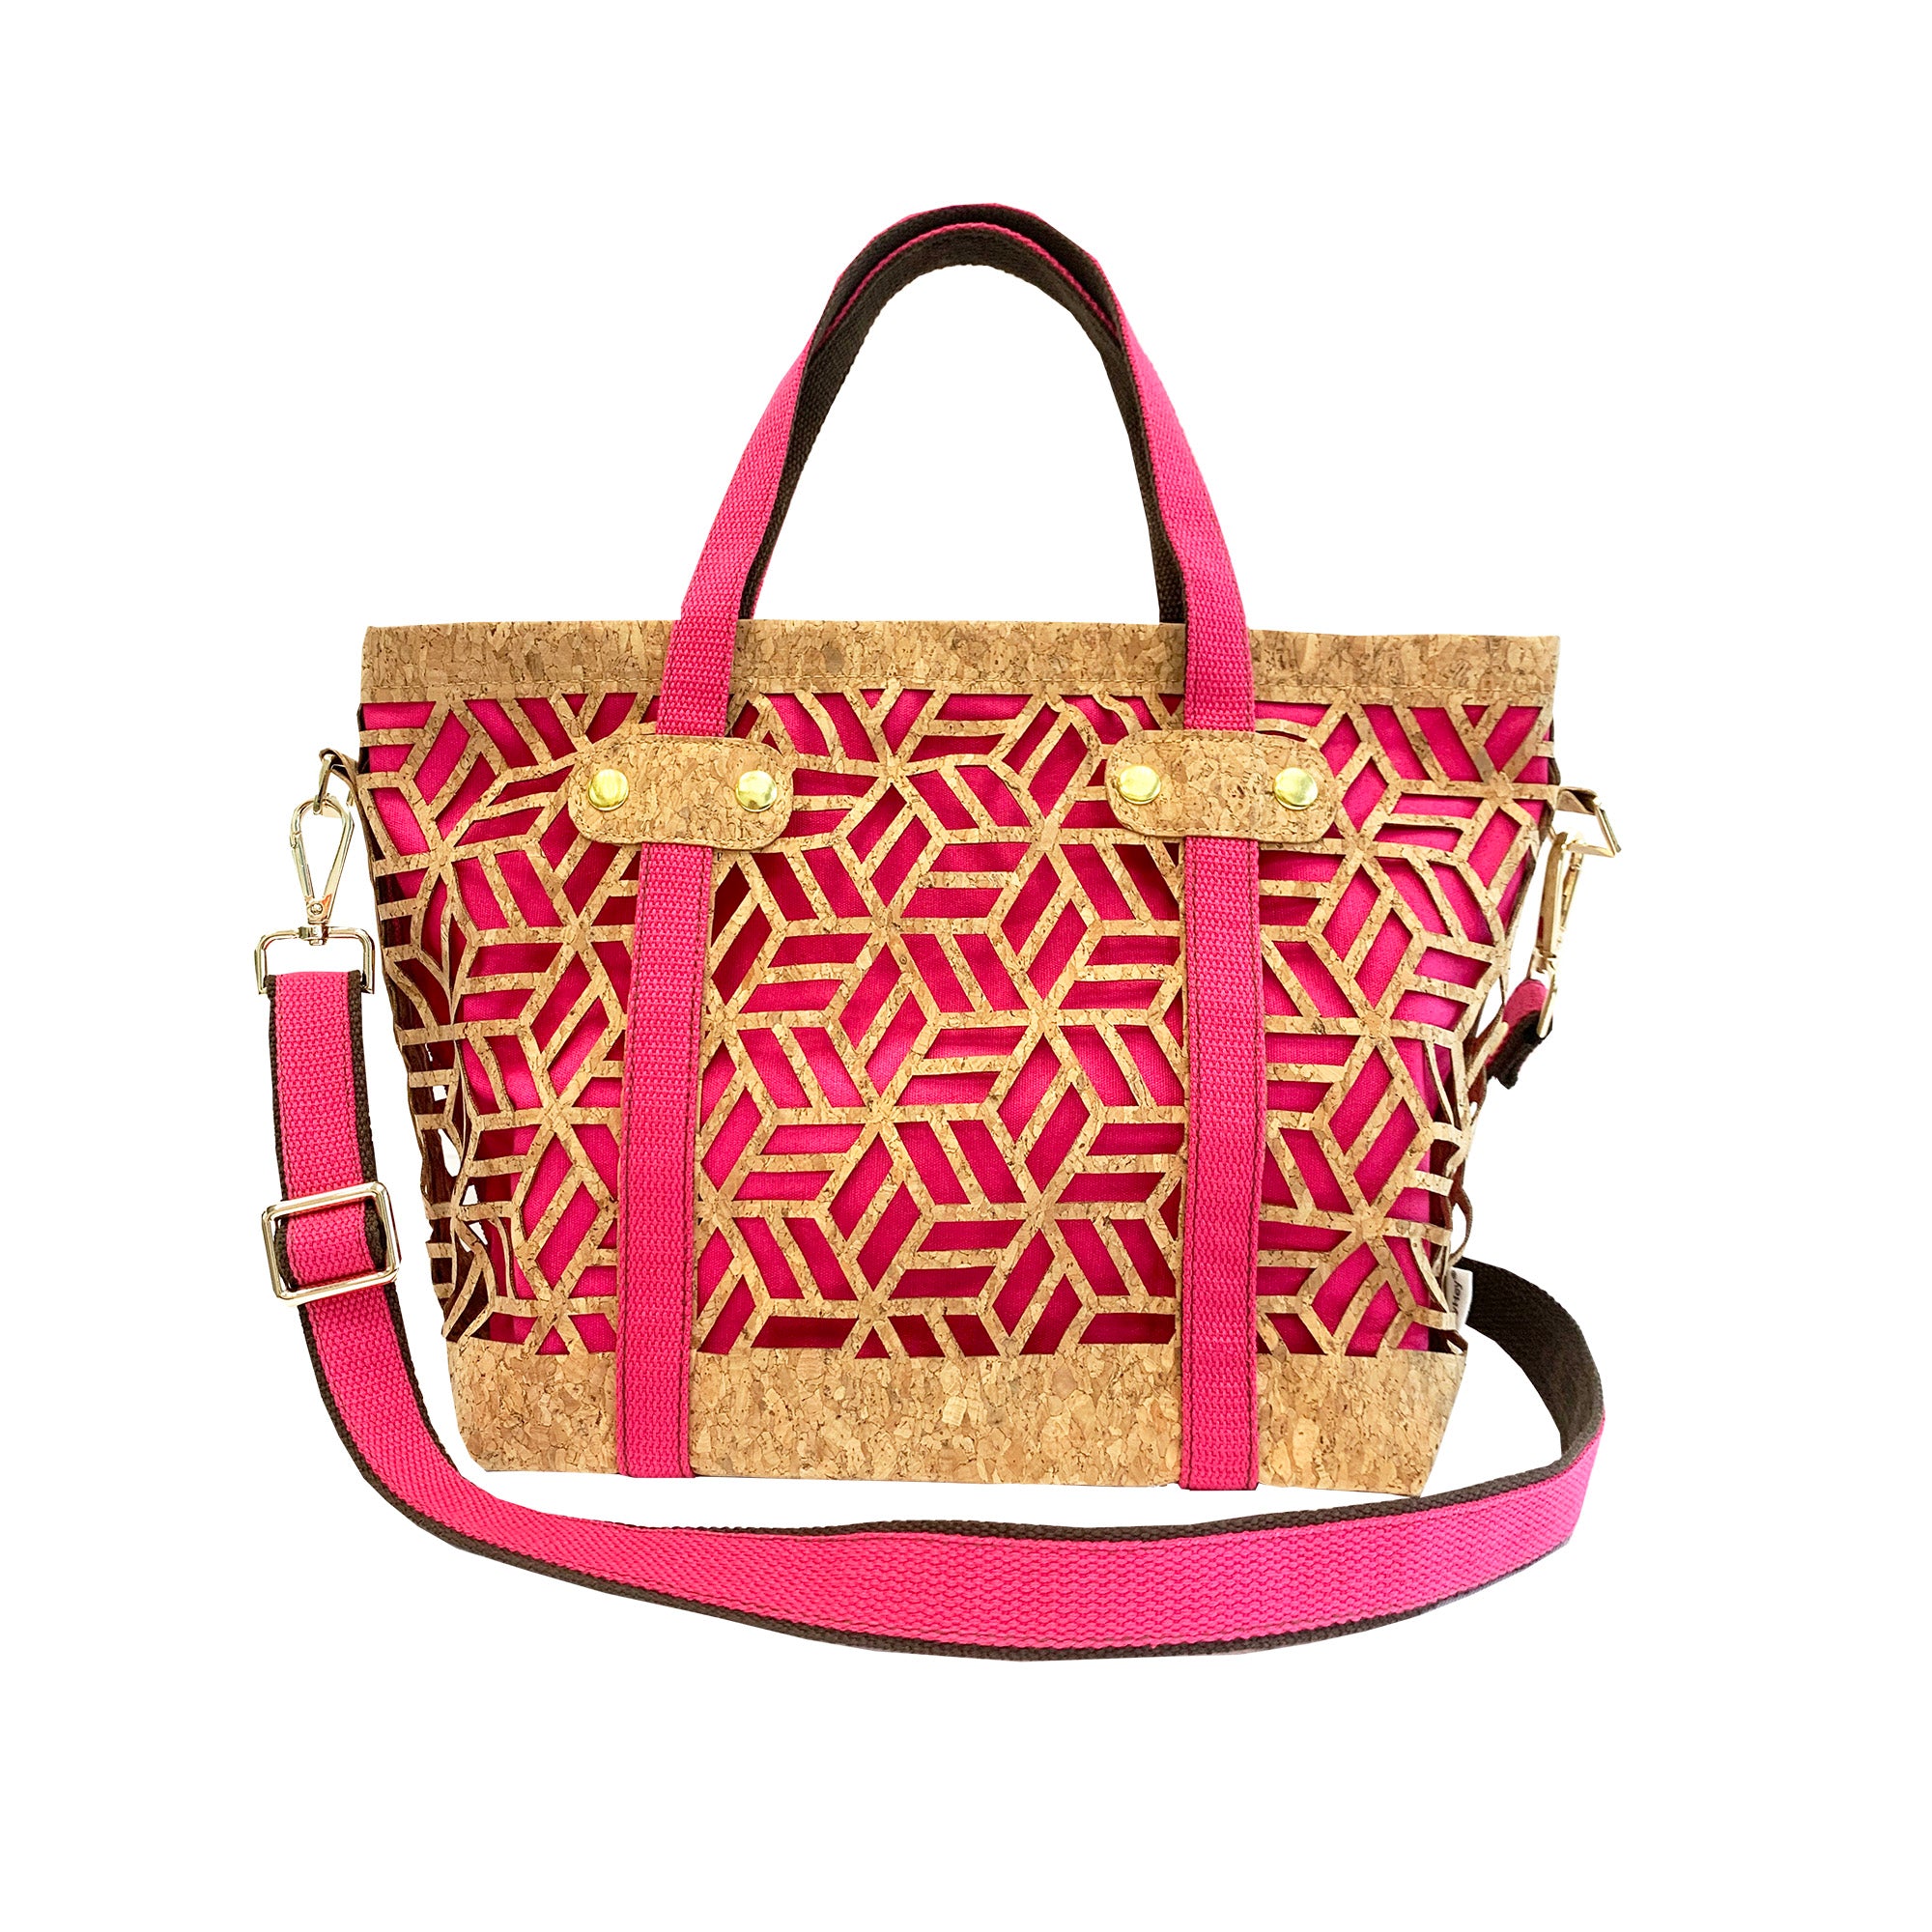 Cork fabric-handbags for women-crossbody bag women-handbags purses-women shoulder bag-fabric purses